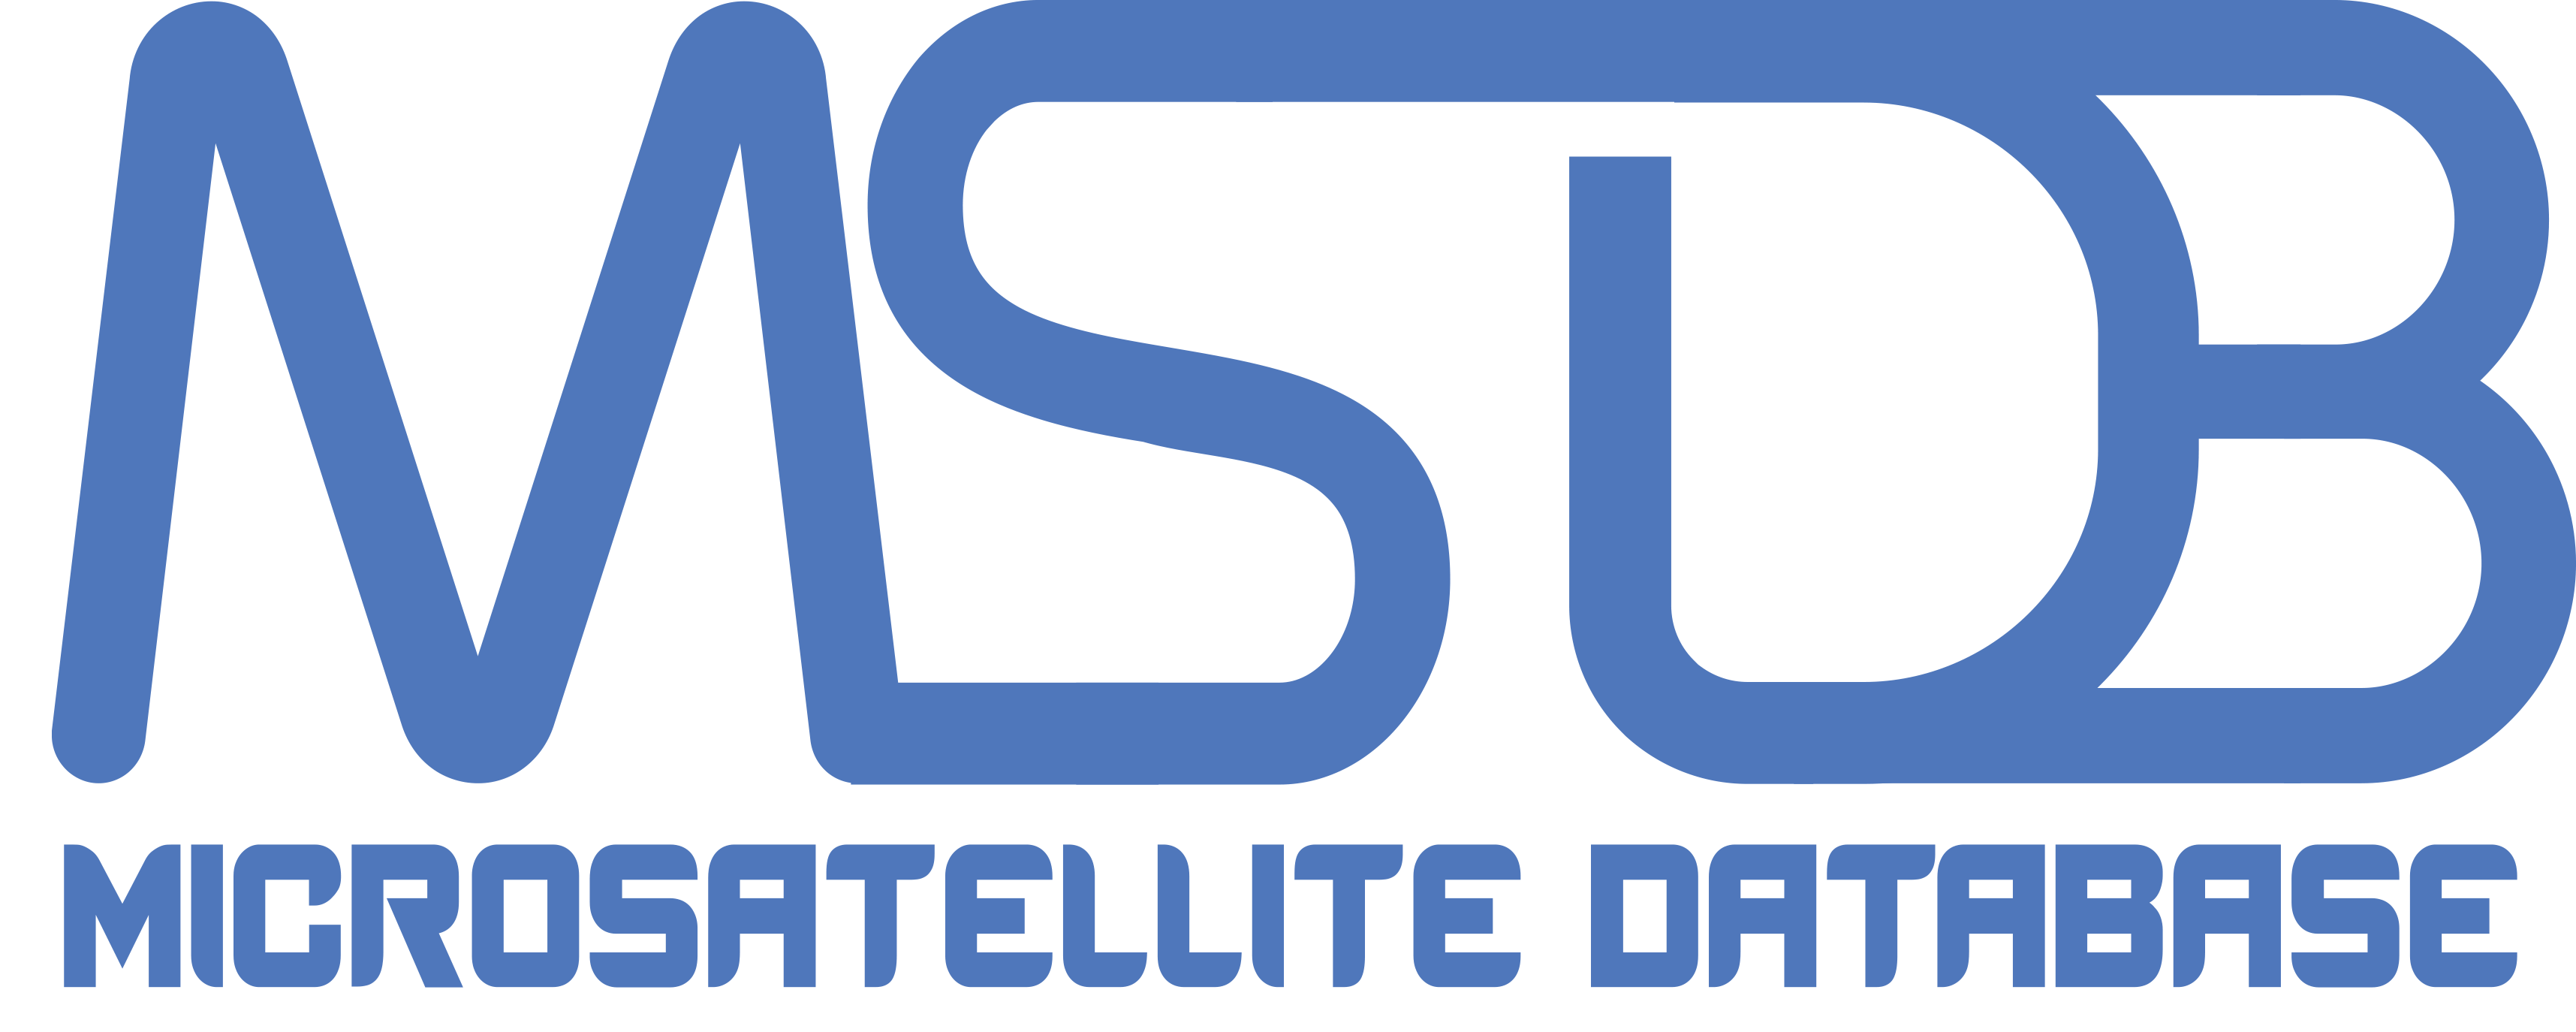 MSDB-logo